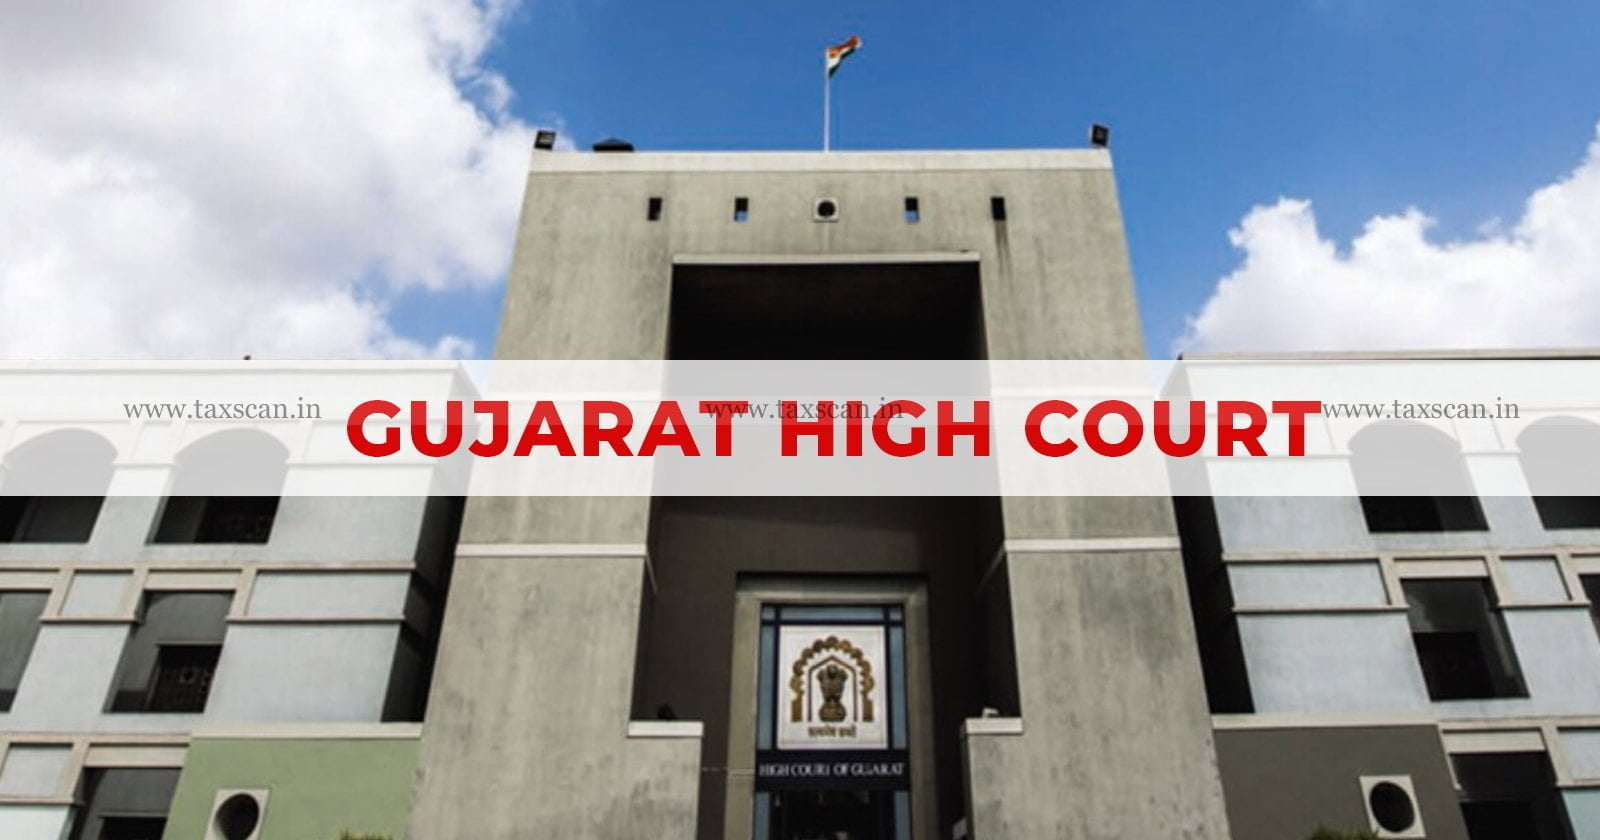 E-Way - Transit - Gujarat HC -Penalty and Demand Orders f- “Ill-Intent” taxscan